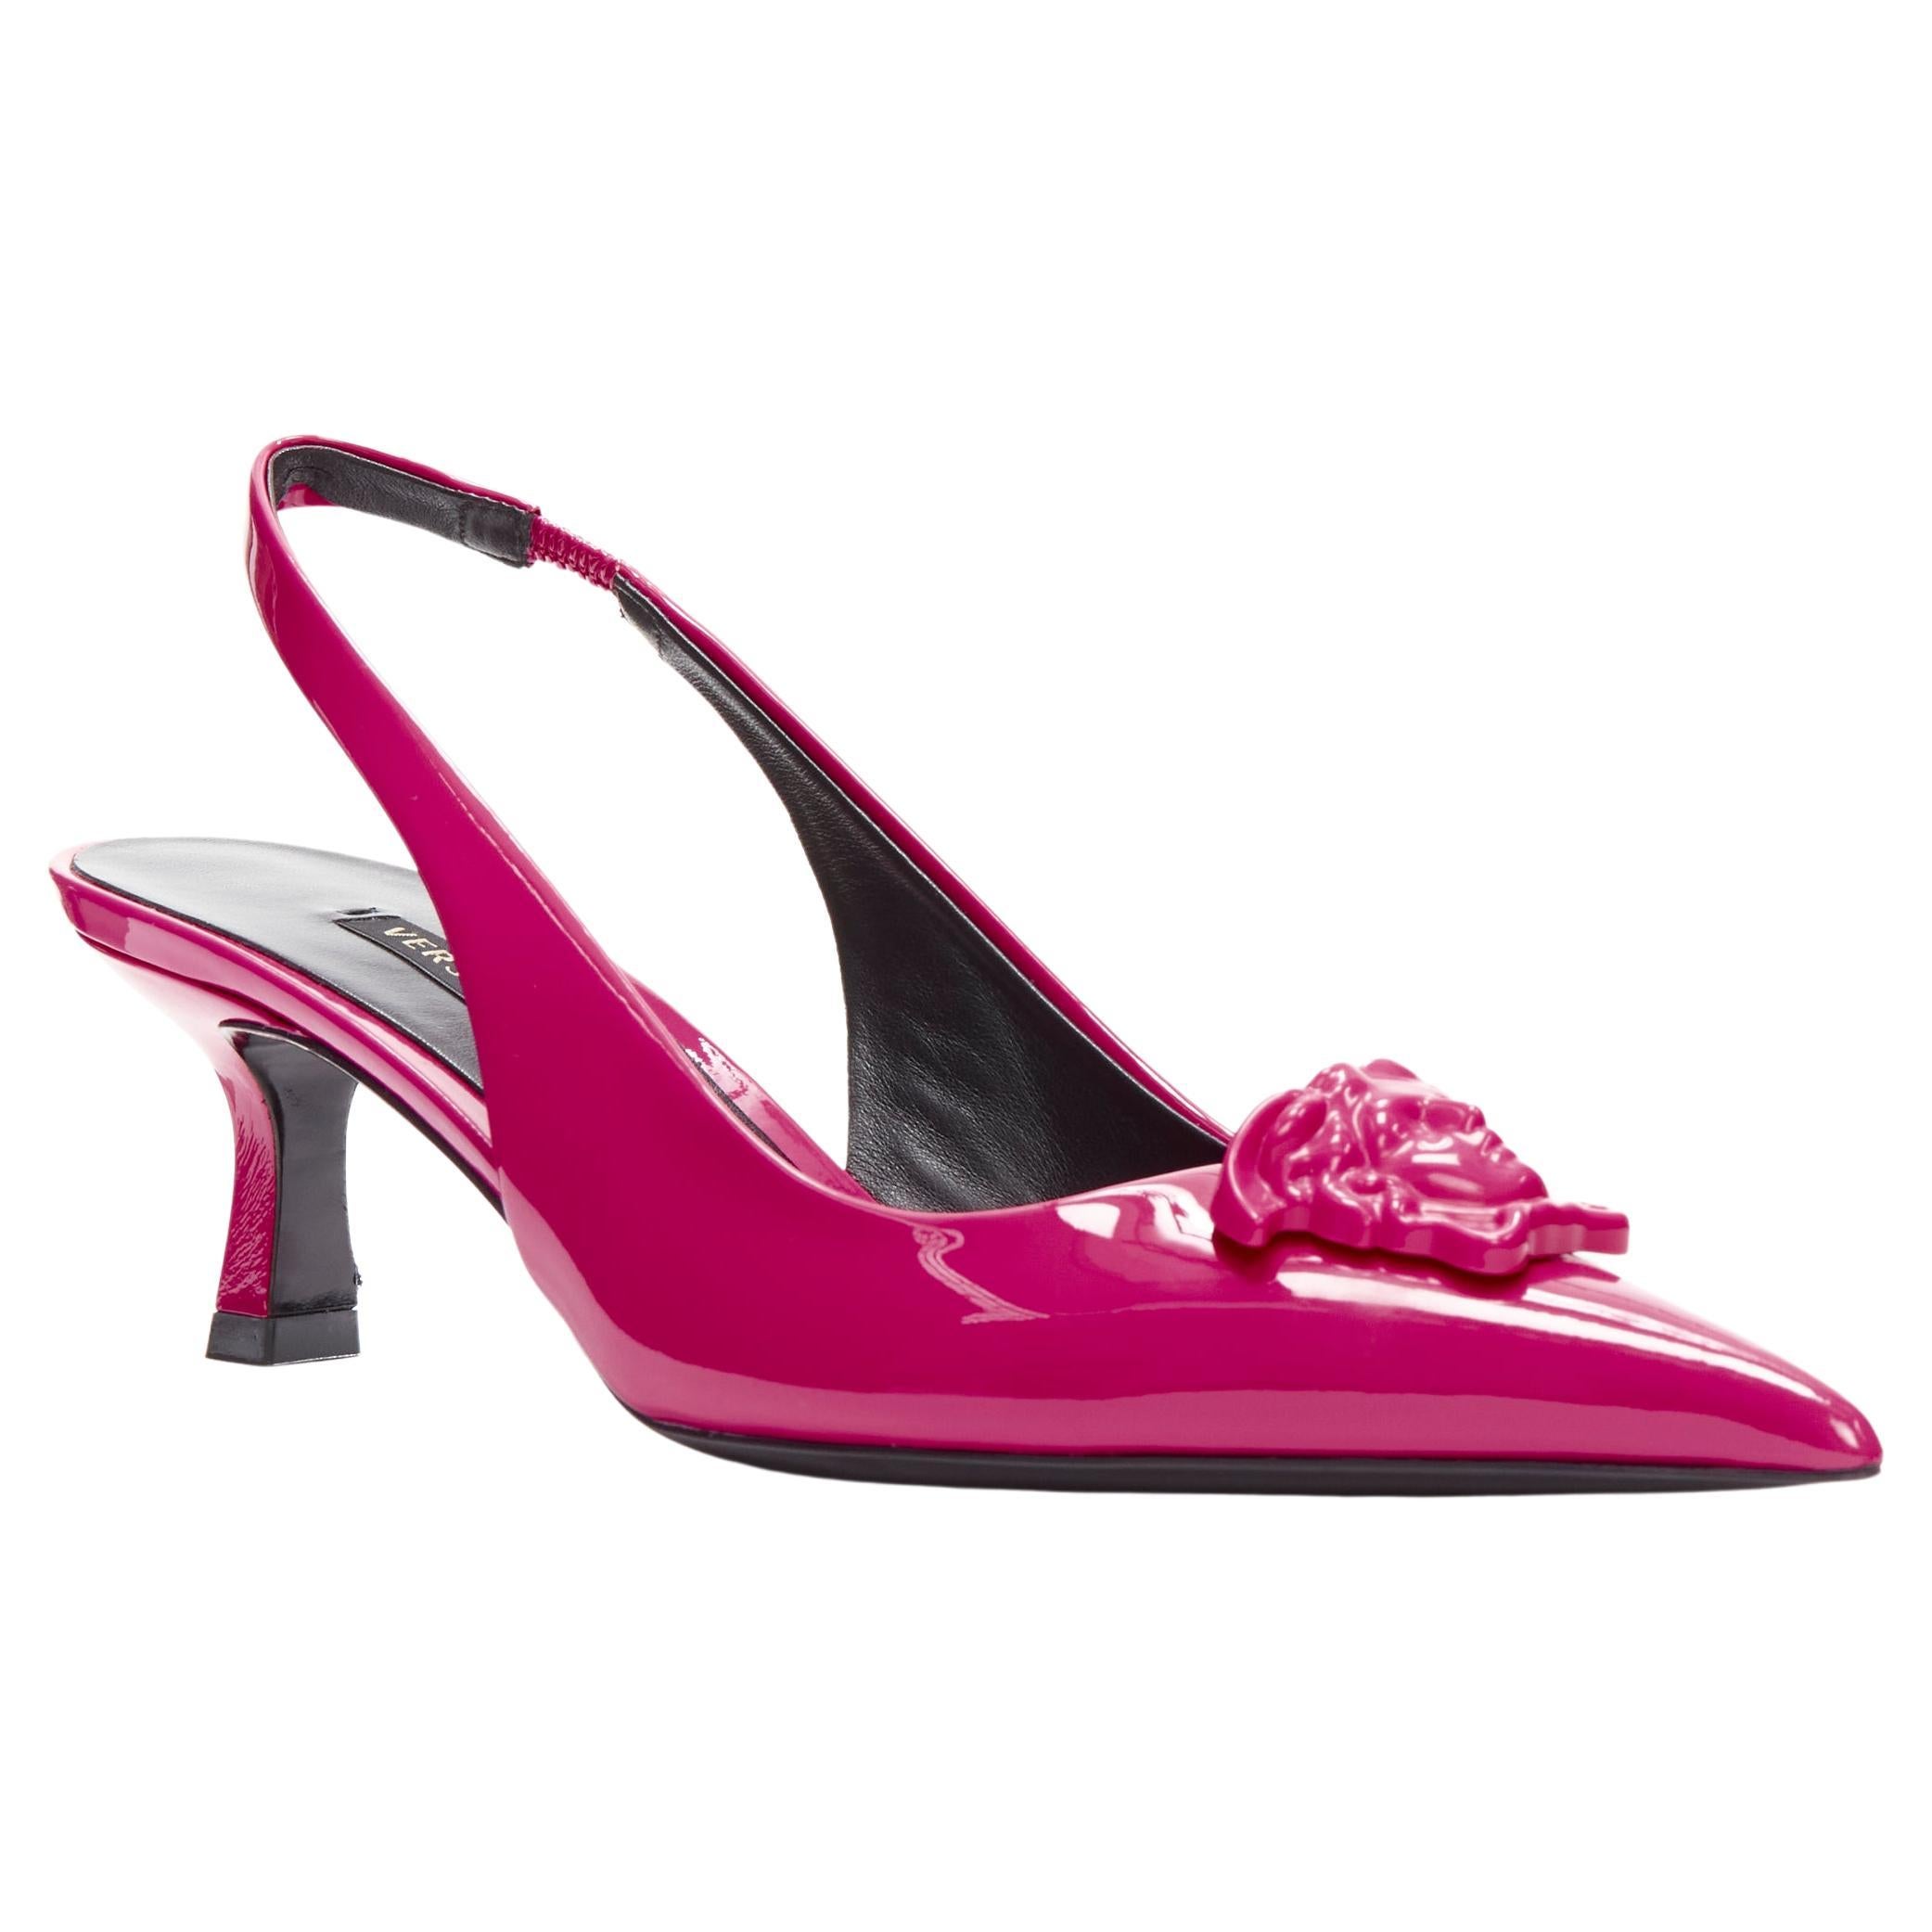 new VERSACE Palazzo Medusa fuscia pink sling kitteh heel pointed toe pump EU37